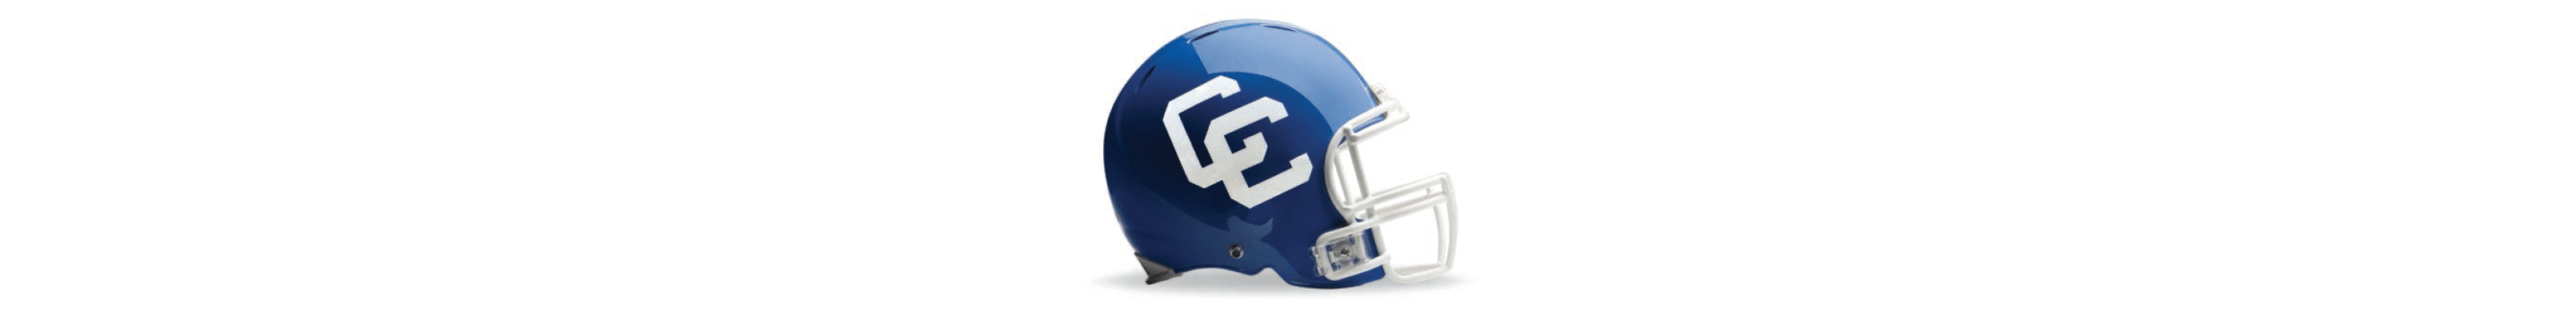 Detroit Catholic Central football helmet logo closeup